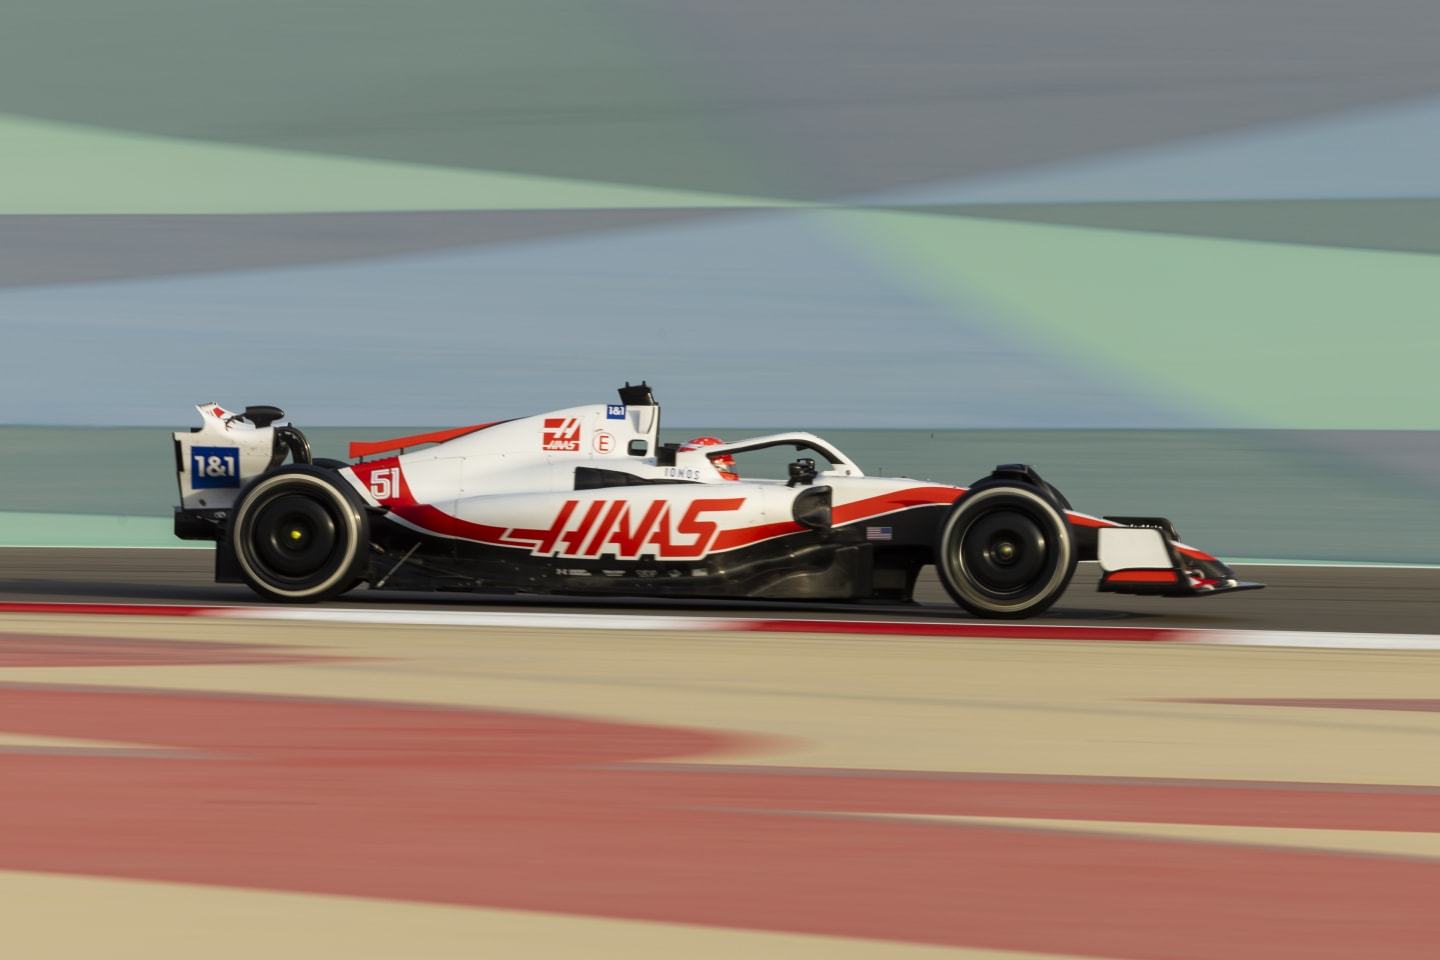 BAHRAIN, BAHRAIN - MARCH 10: Pietro Fittipaldi of Brazil driving the (51) Haas F1 VF-22 Ferrari on